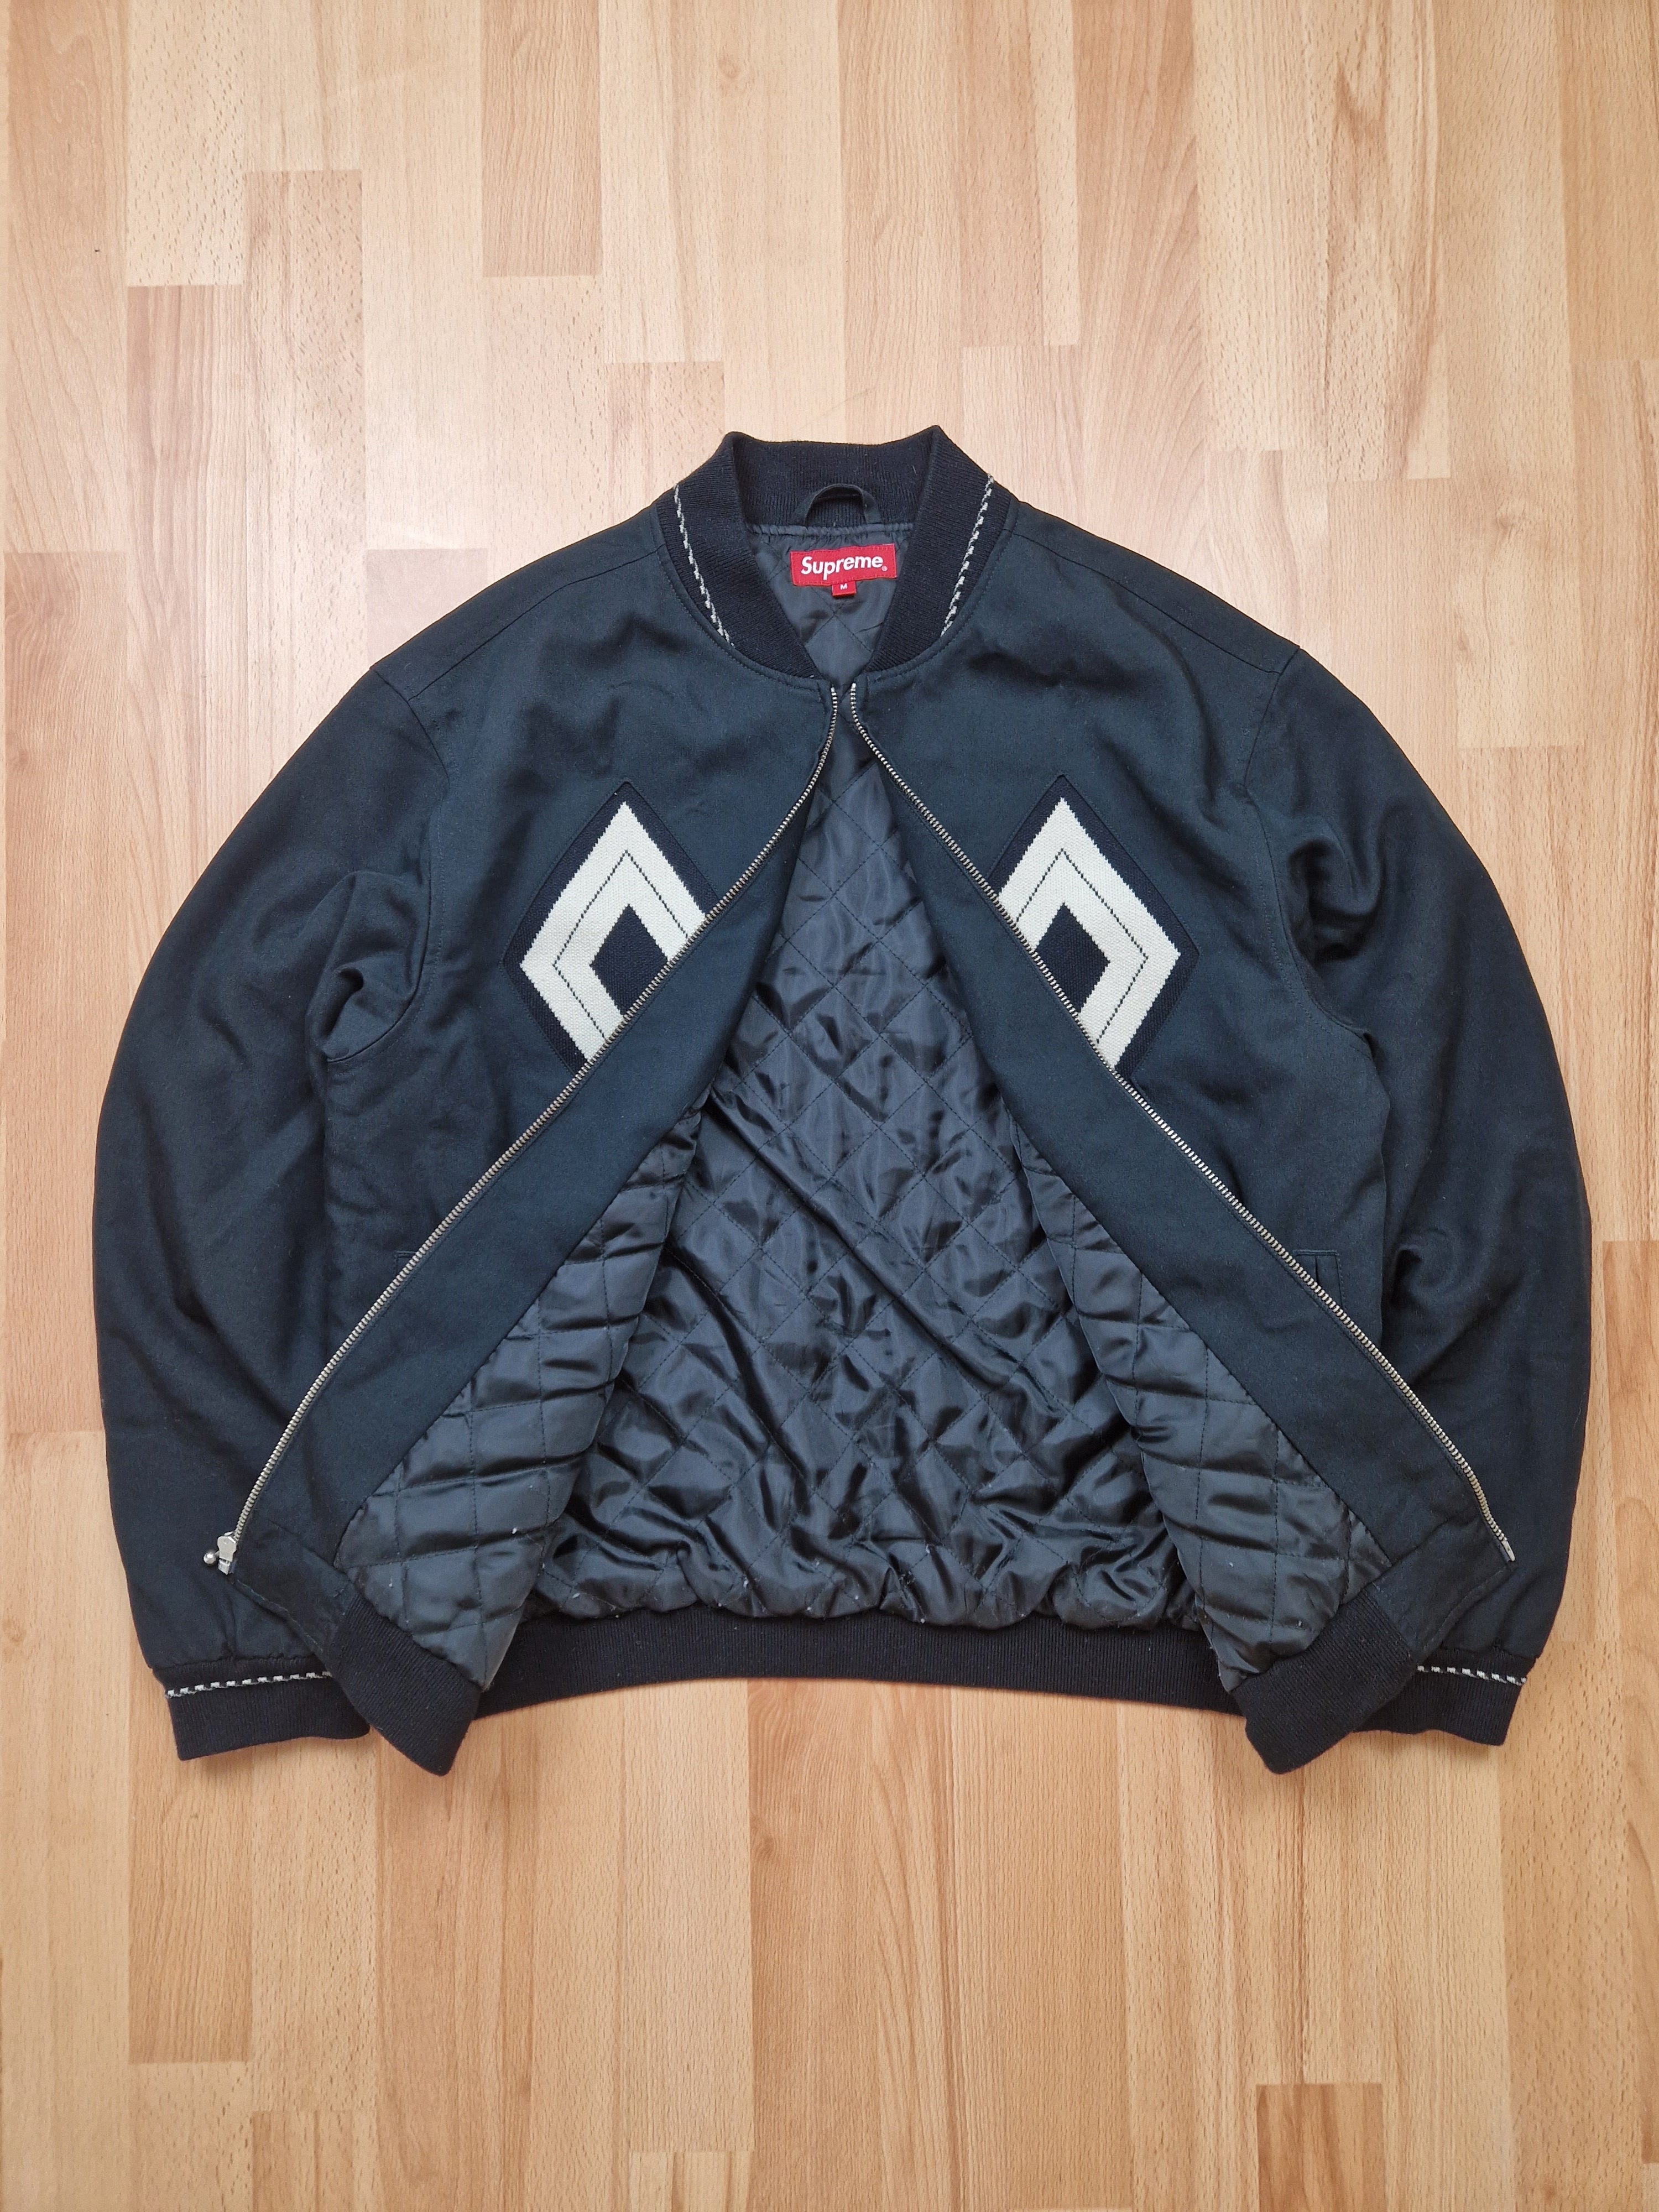 Supreme Diamond Rayon Bomber Jacket (M) – uniform.streetwear